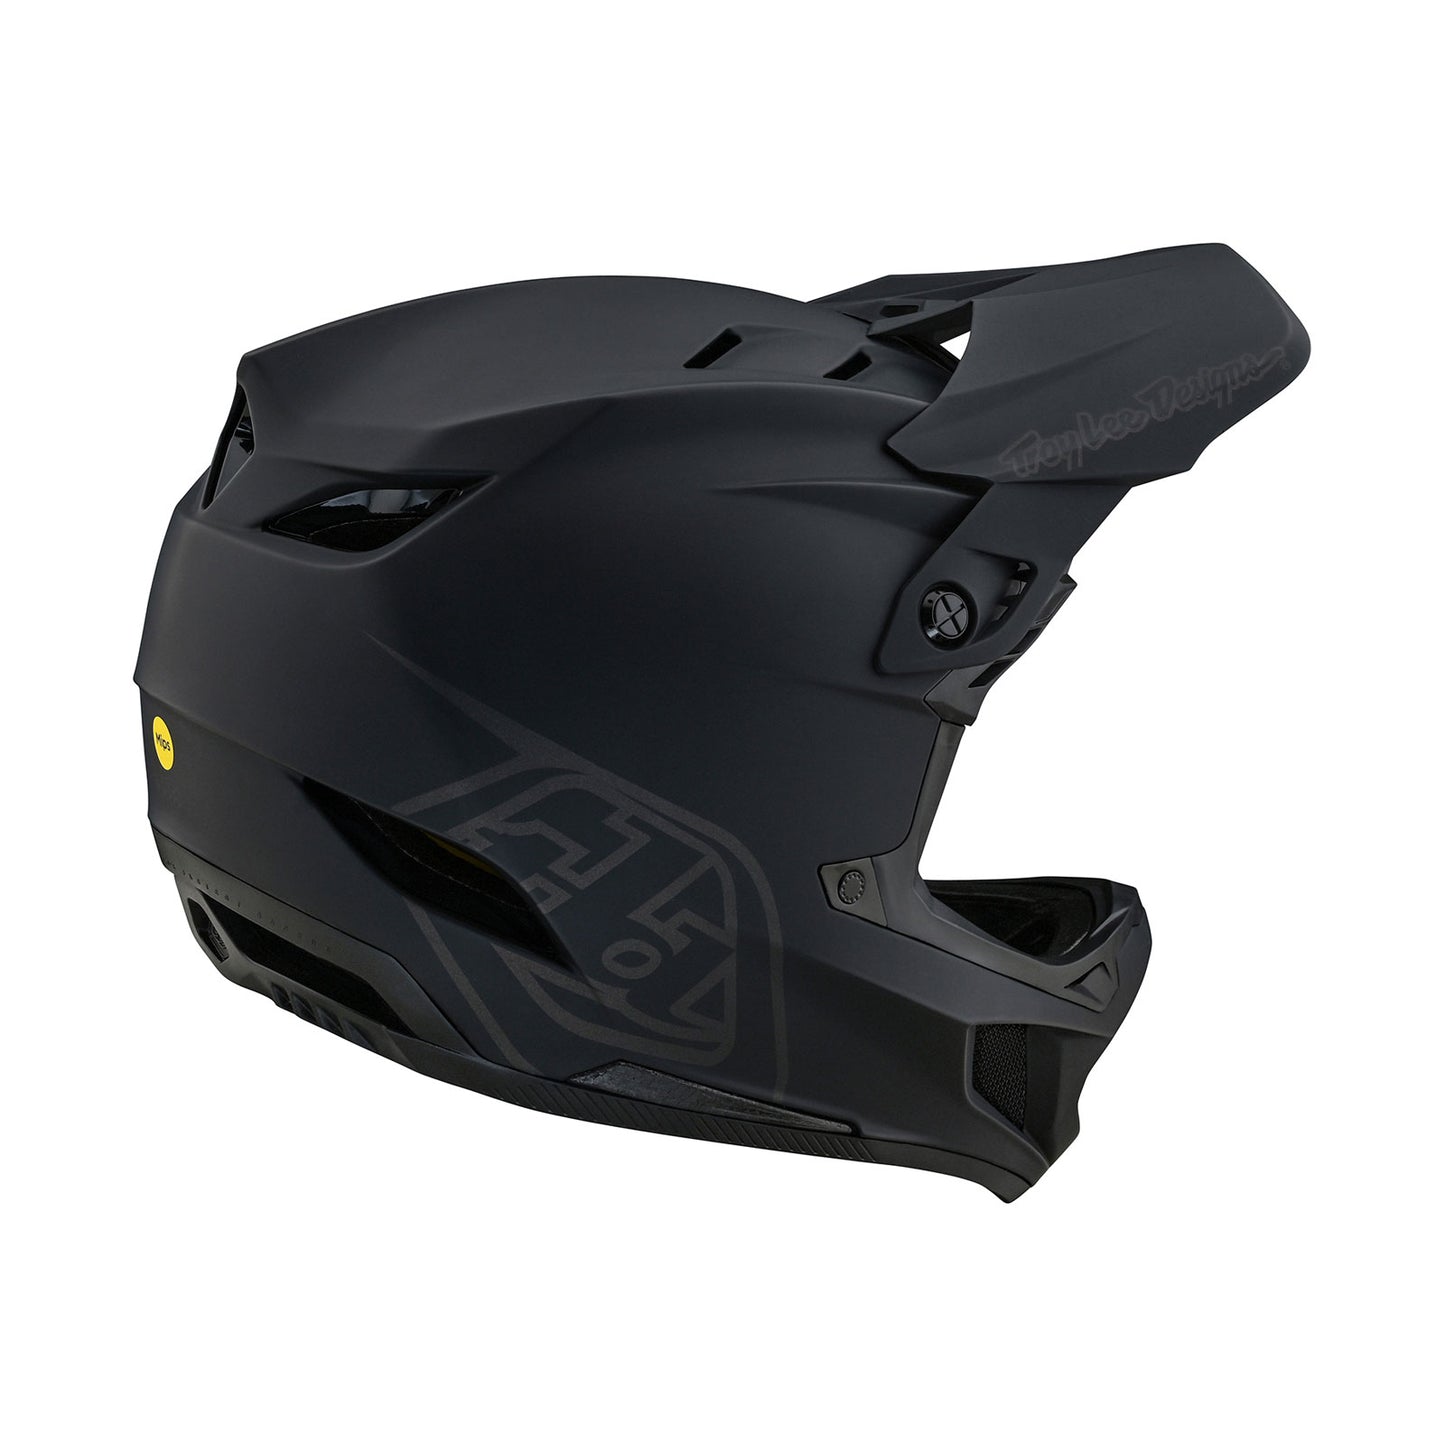 D4 Composite Helmet Stealth Black